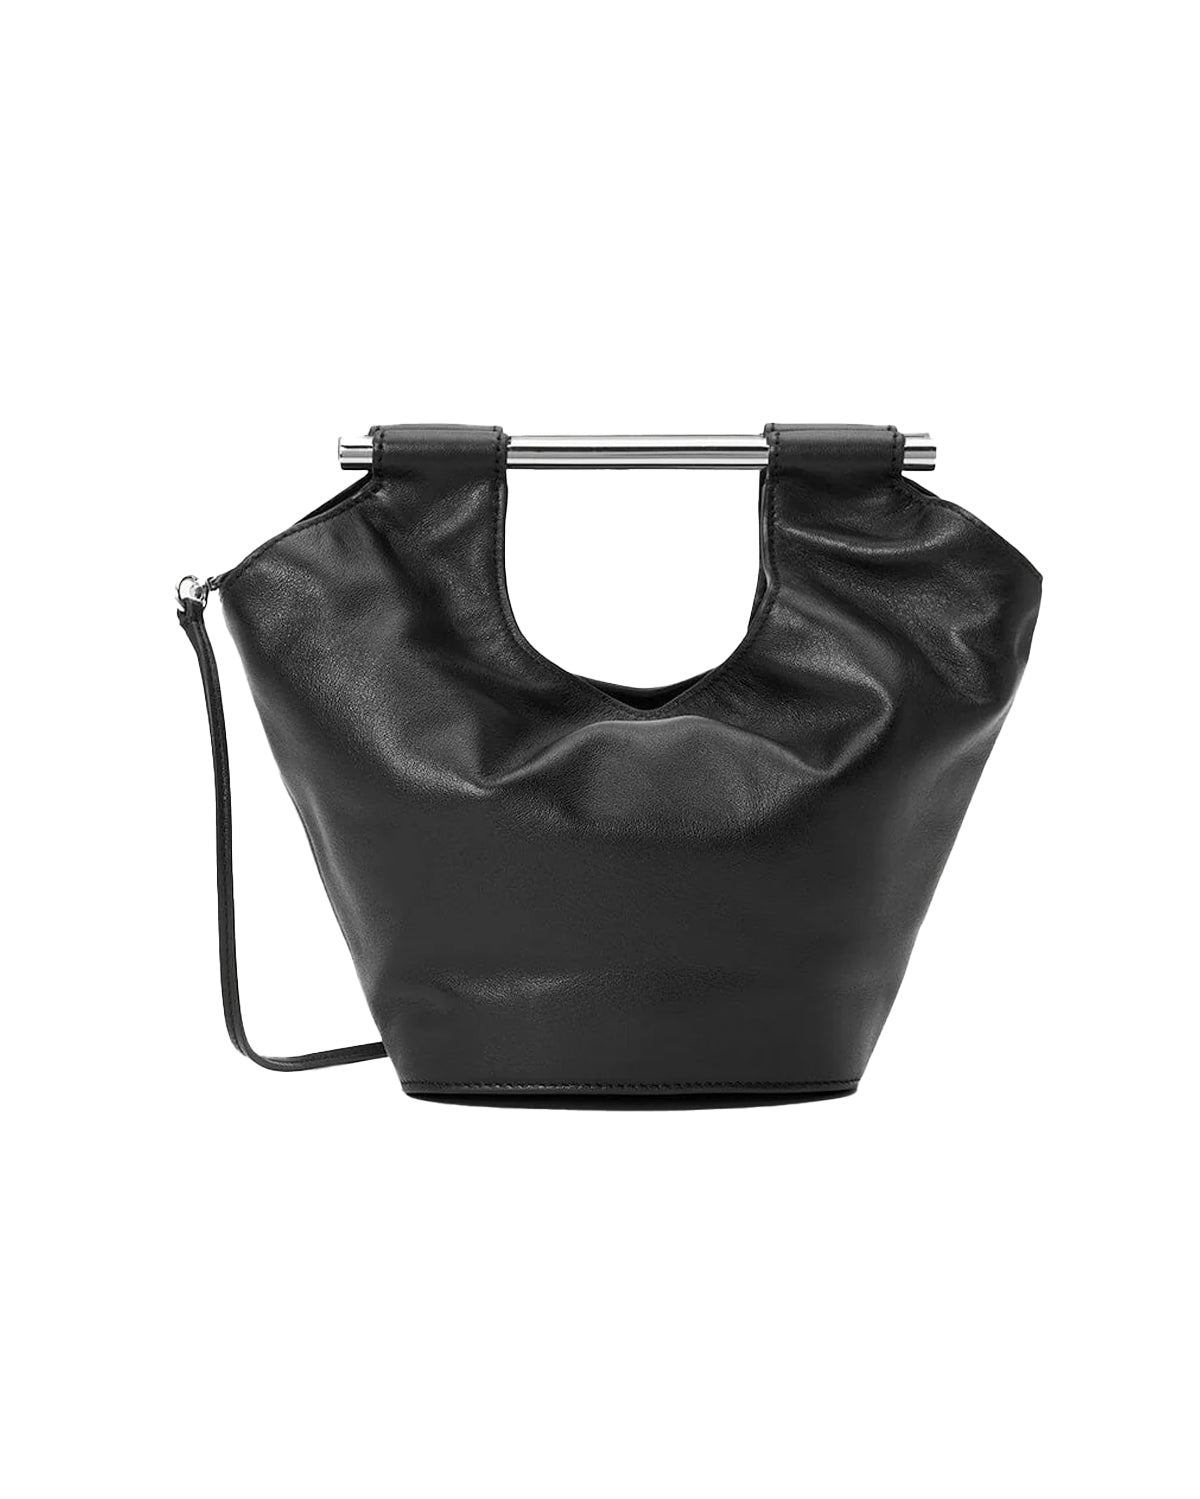 Mar Mini Bucket Bag (Black)